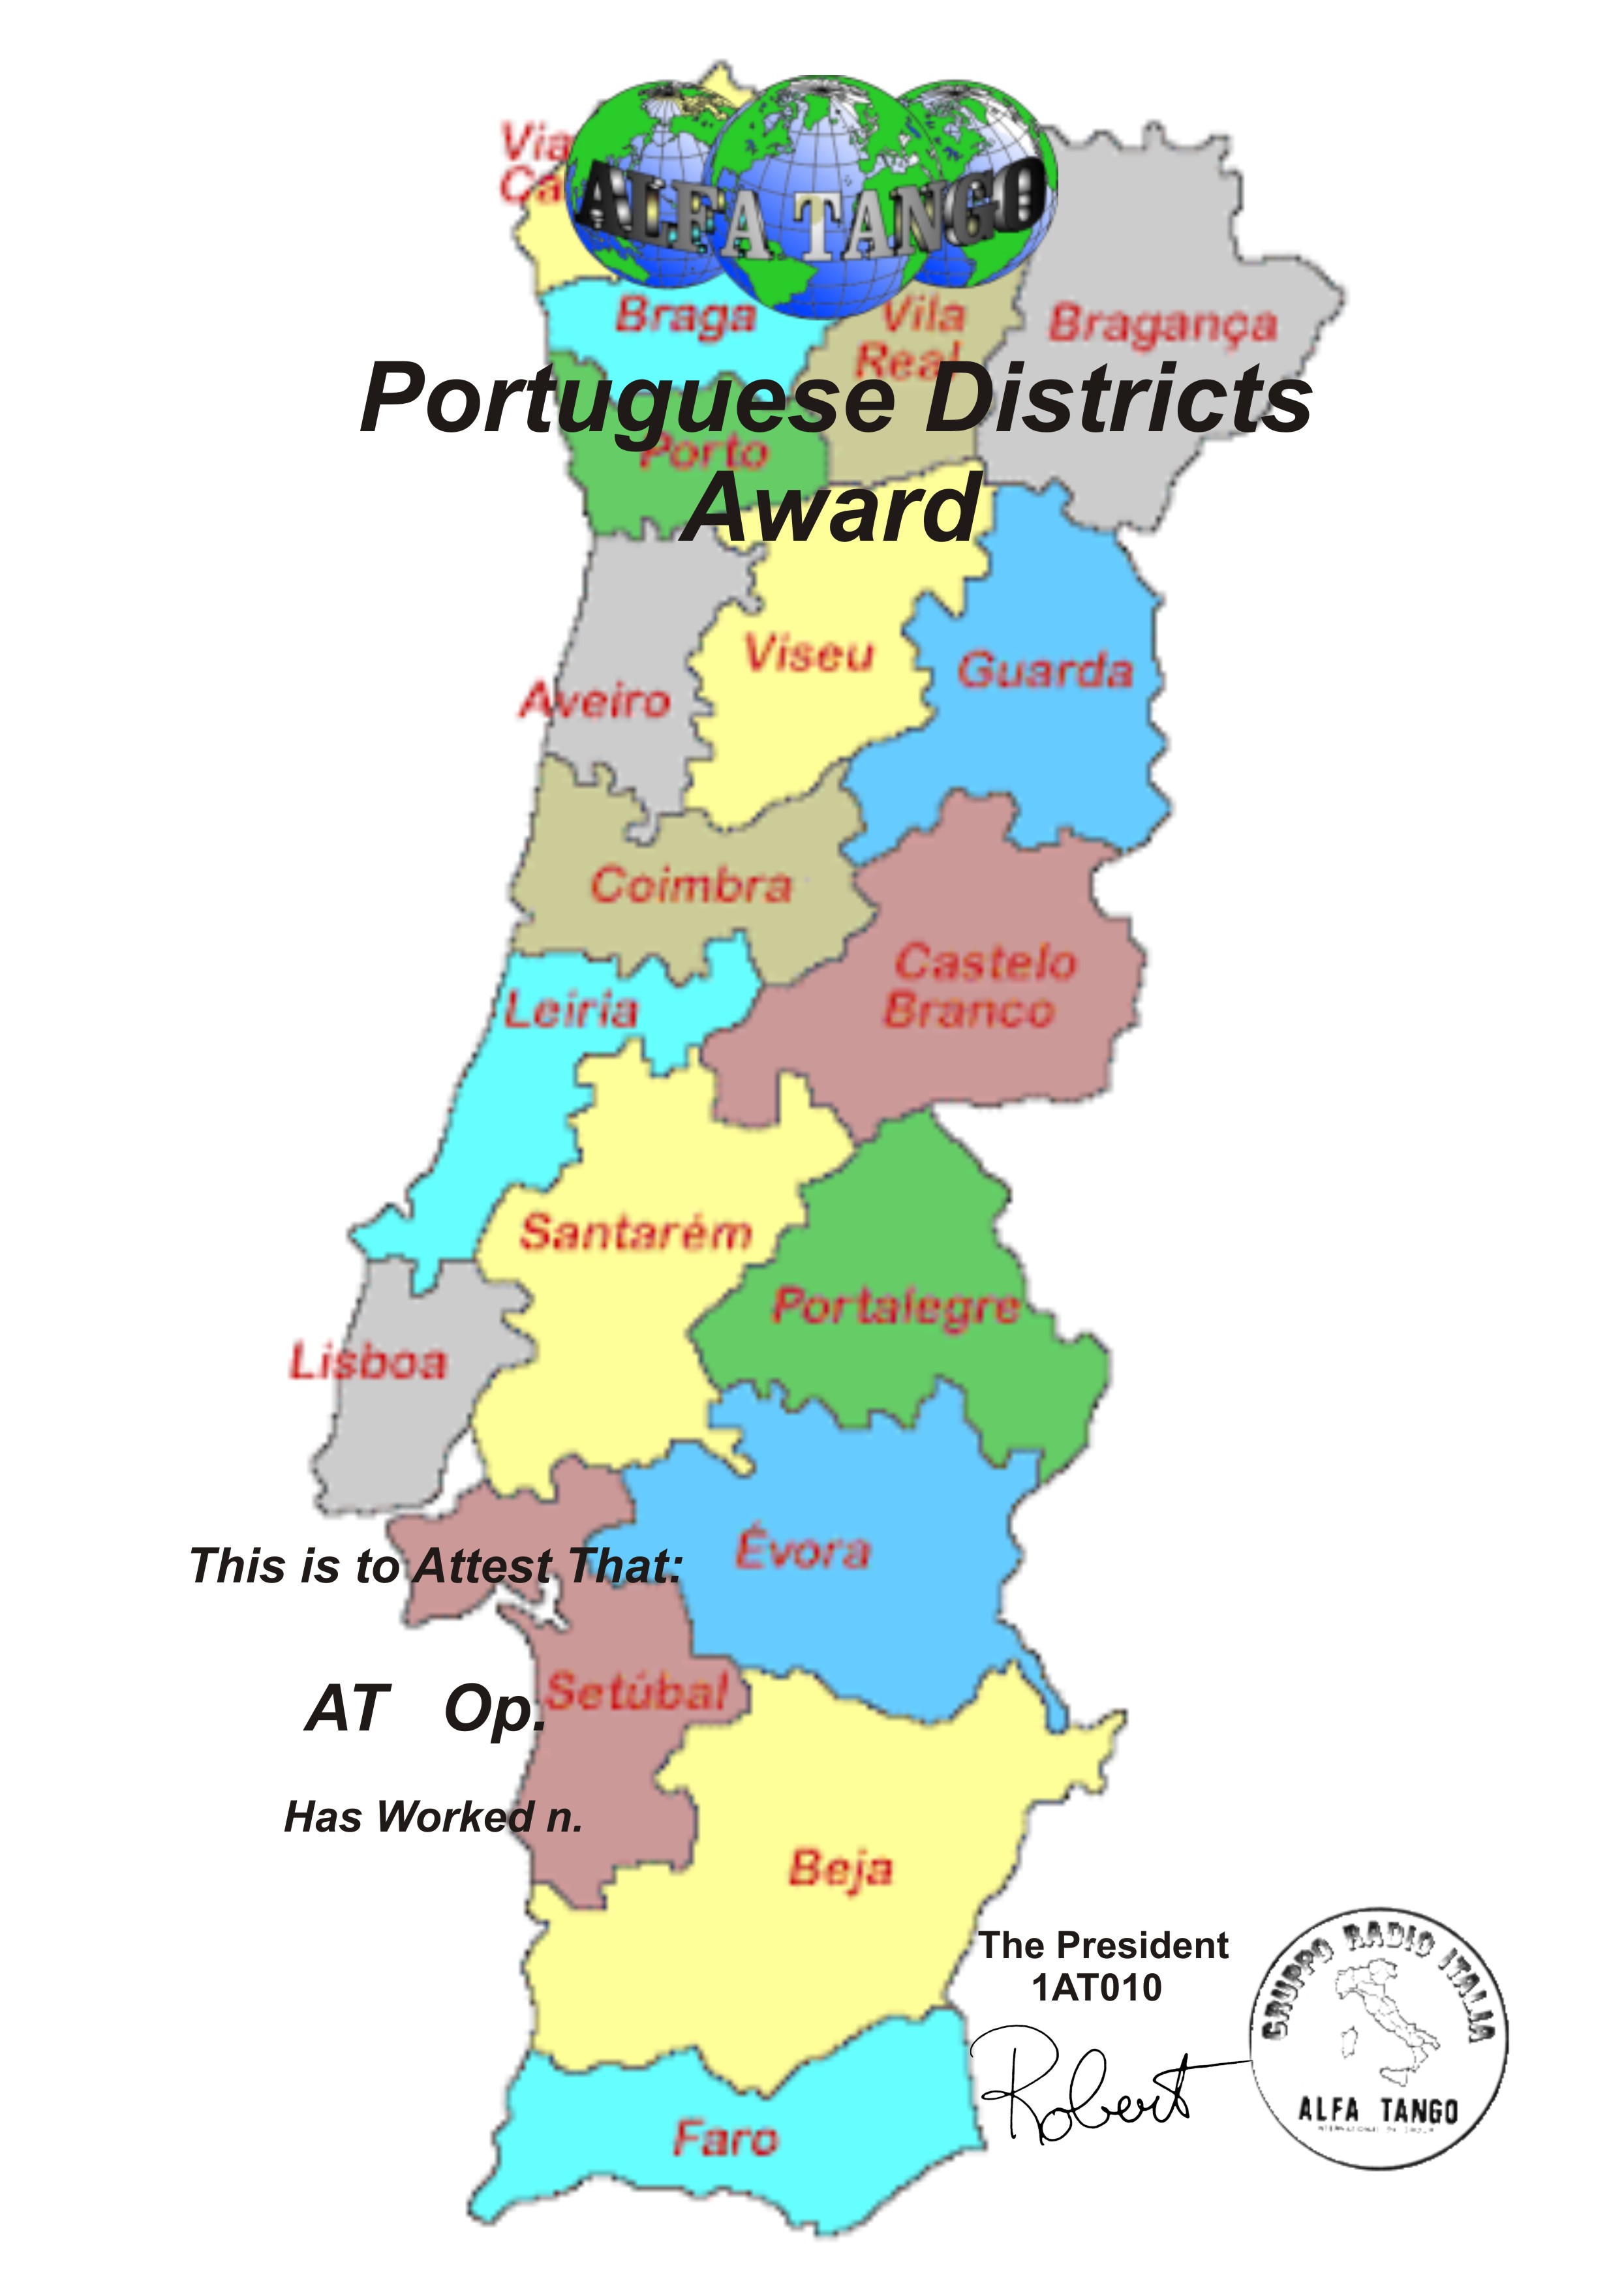 52_Portuguese_Districts_Award.jpg